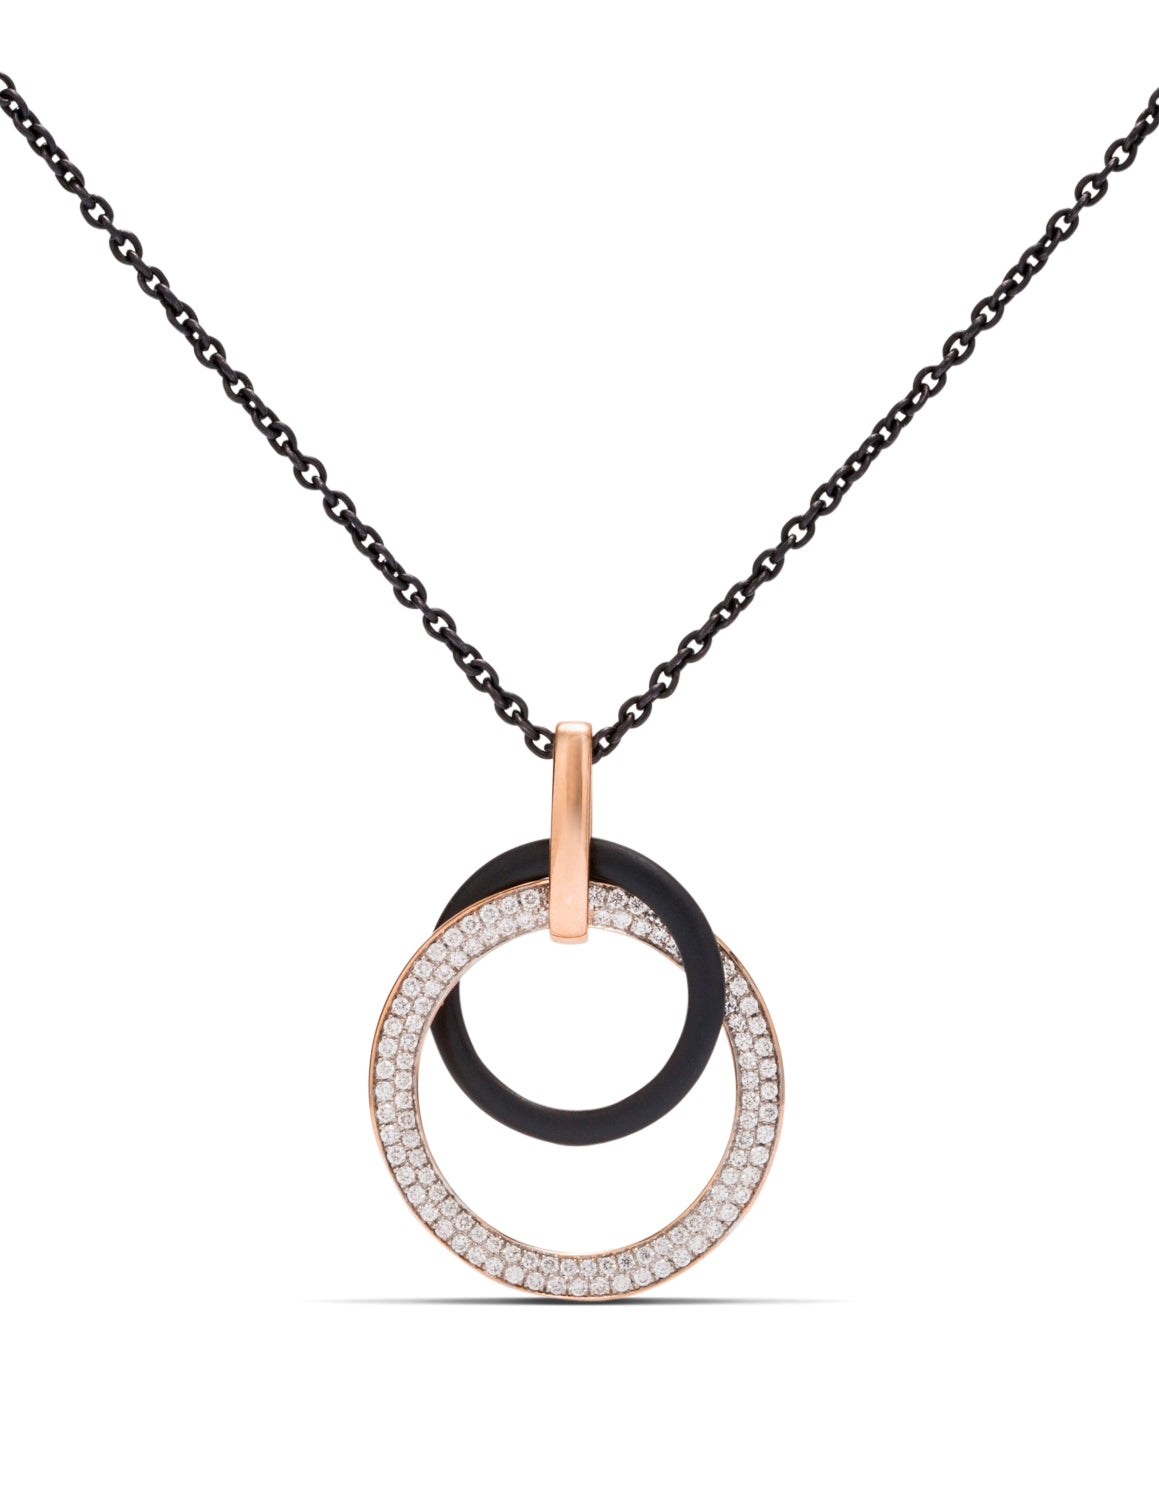 Blackened Steel and Rose Gold Circle Pendant - Charles Koll Jewellers